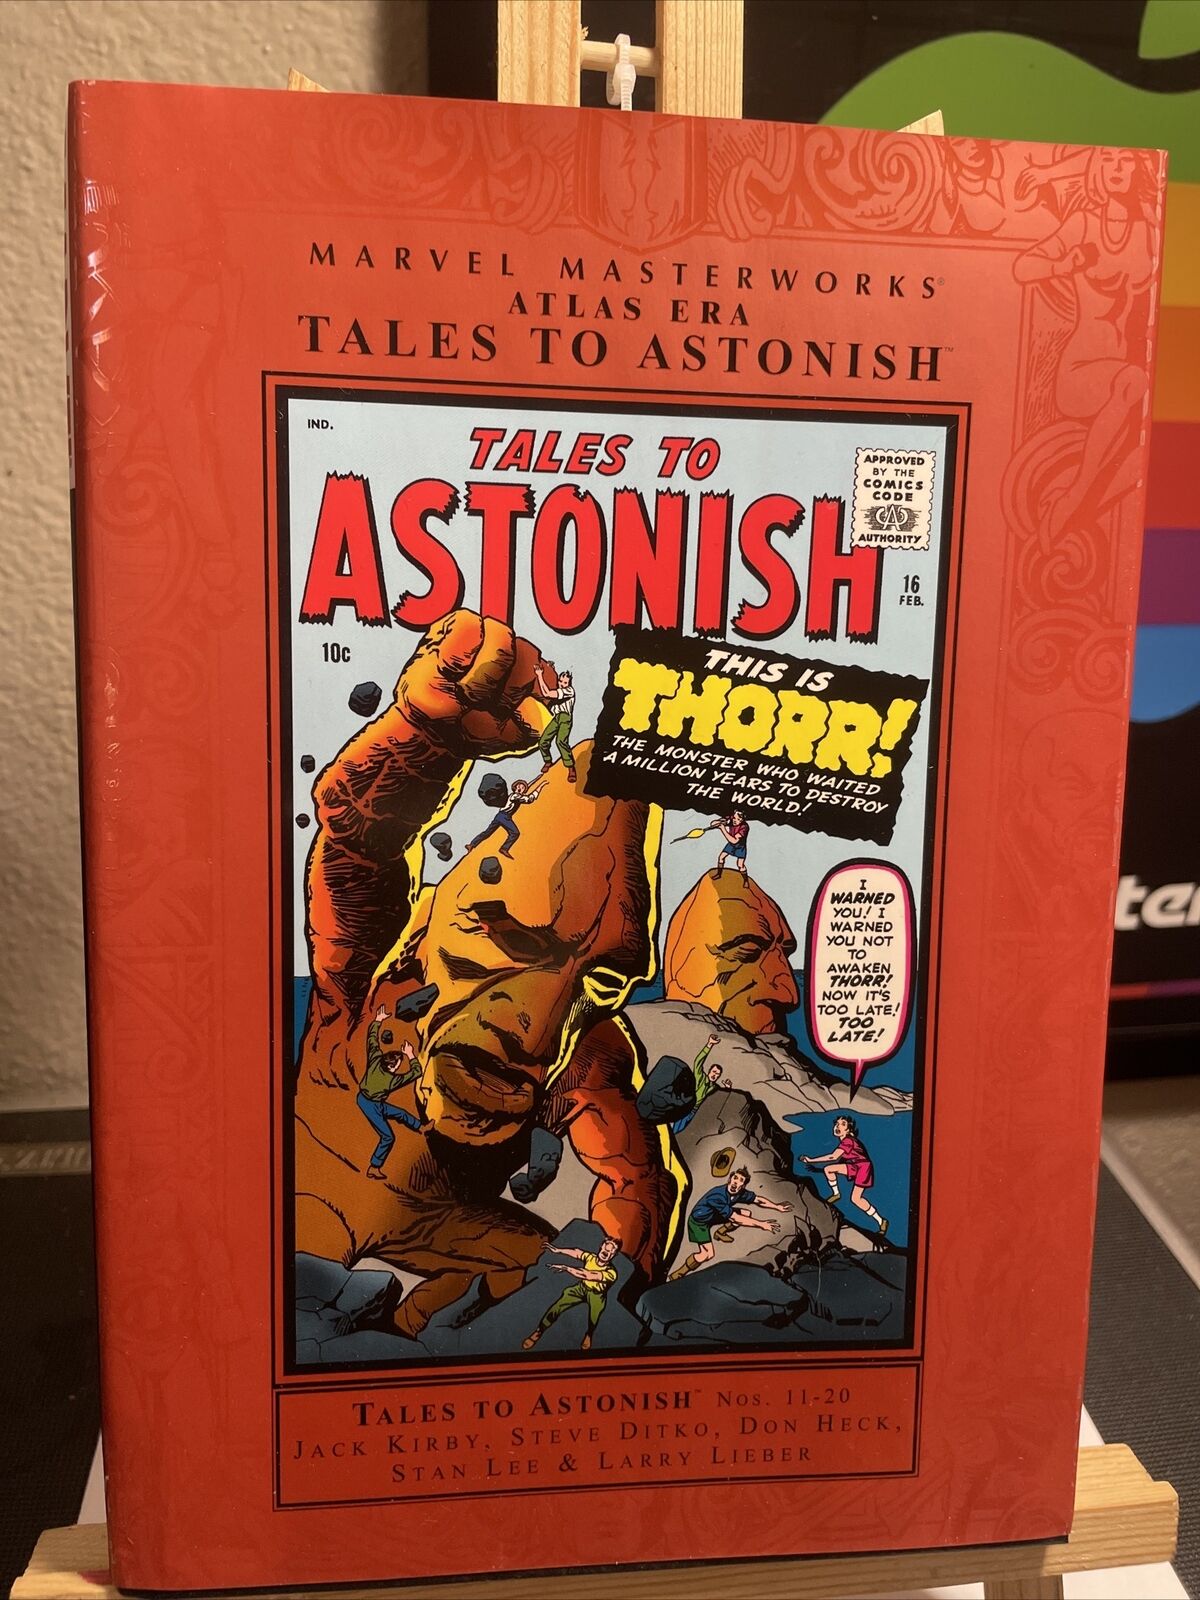 Marvel Masterworks: Atlas Era Tales to Astonish #2 (Marvel Comics March 2008)